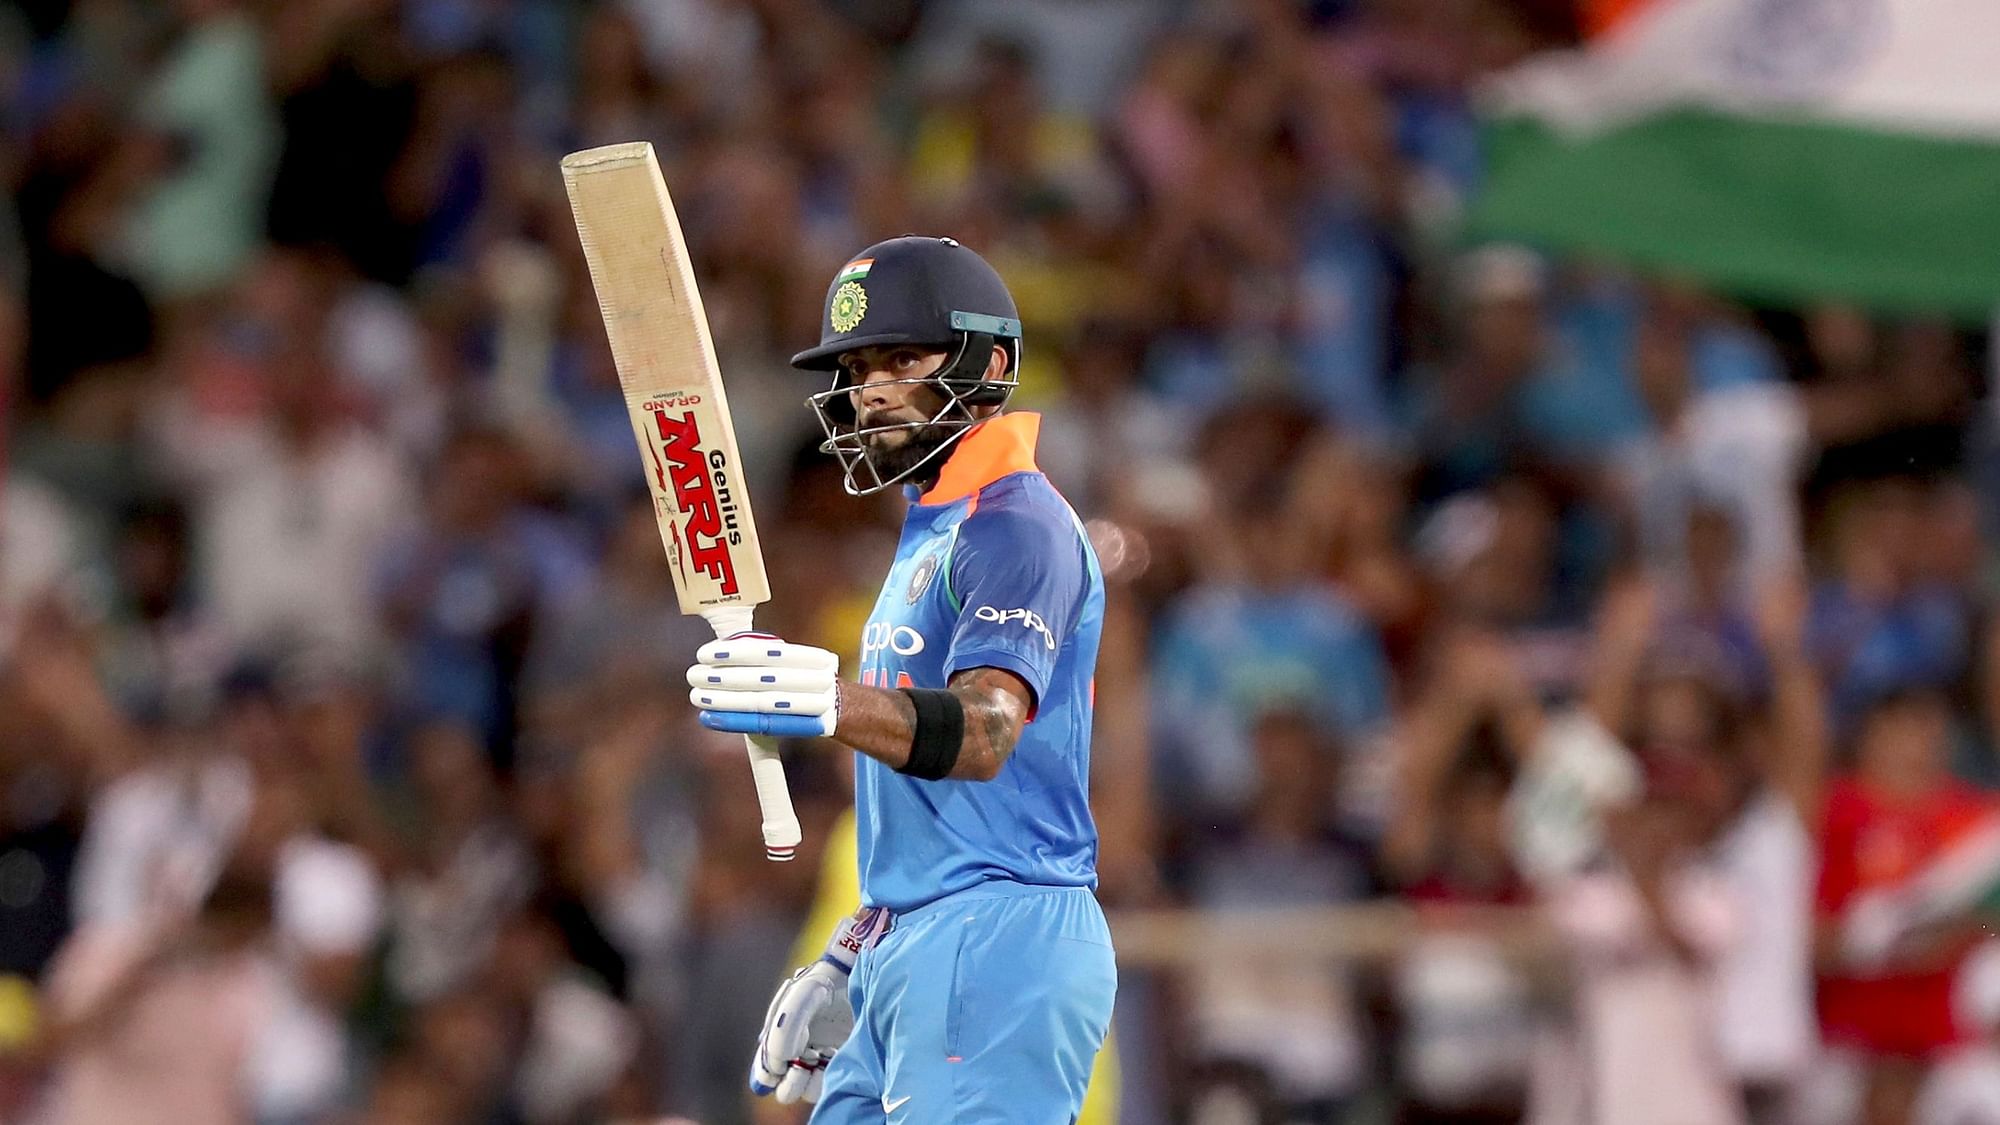 India captain Virat Kohli scored a century in the second ODI against Australia at Adelaide.